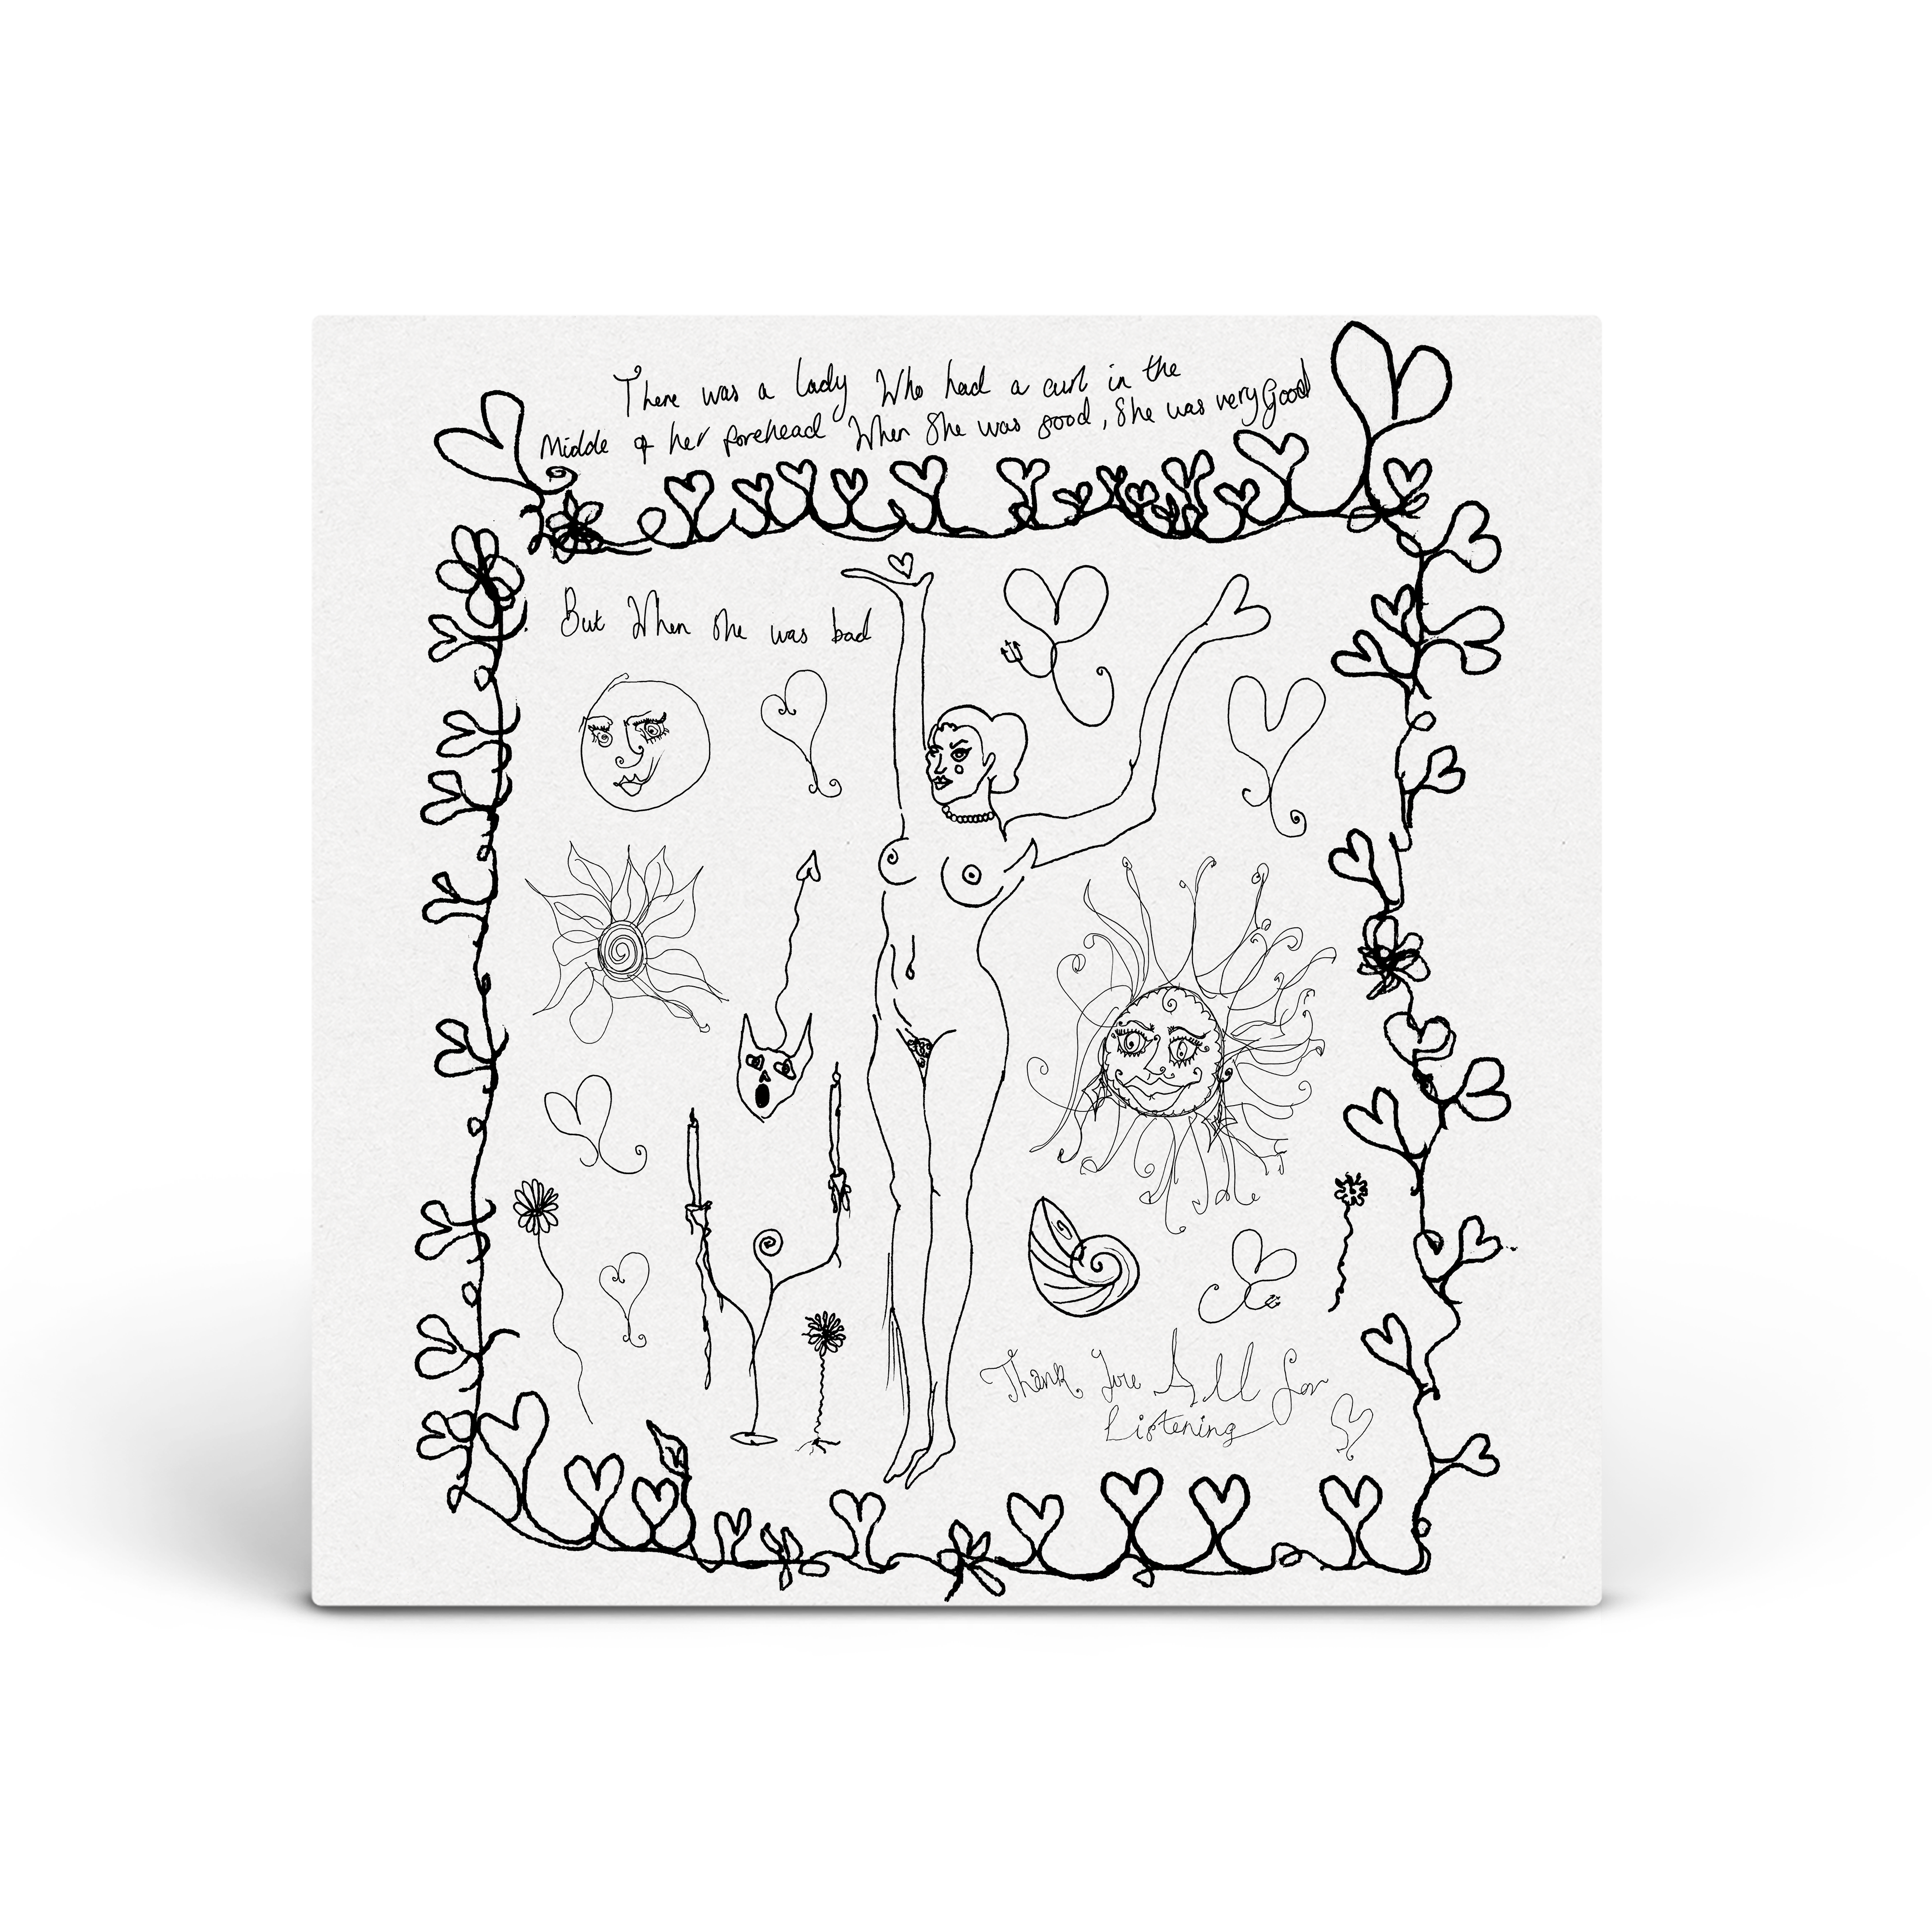 Celeste - Hand Drawn CD Sleeve